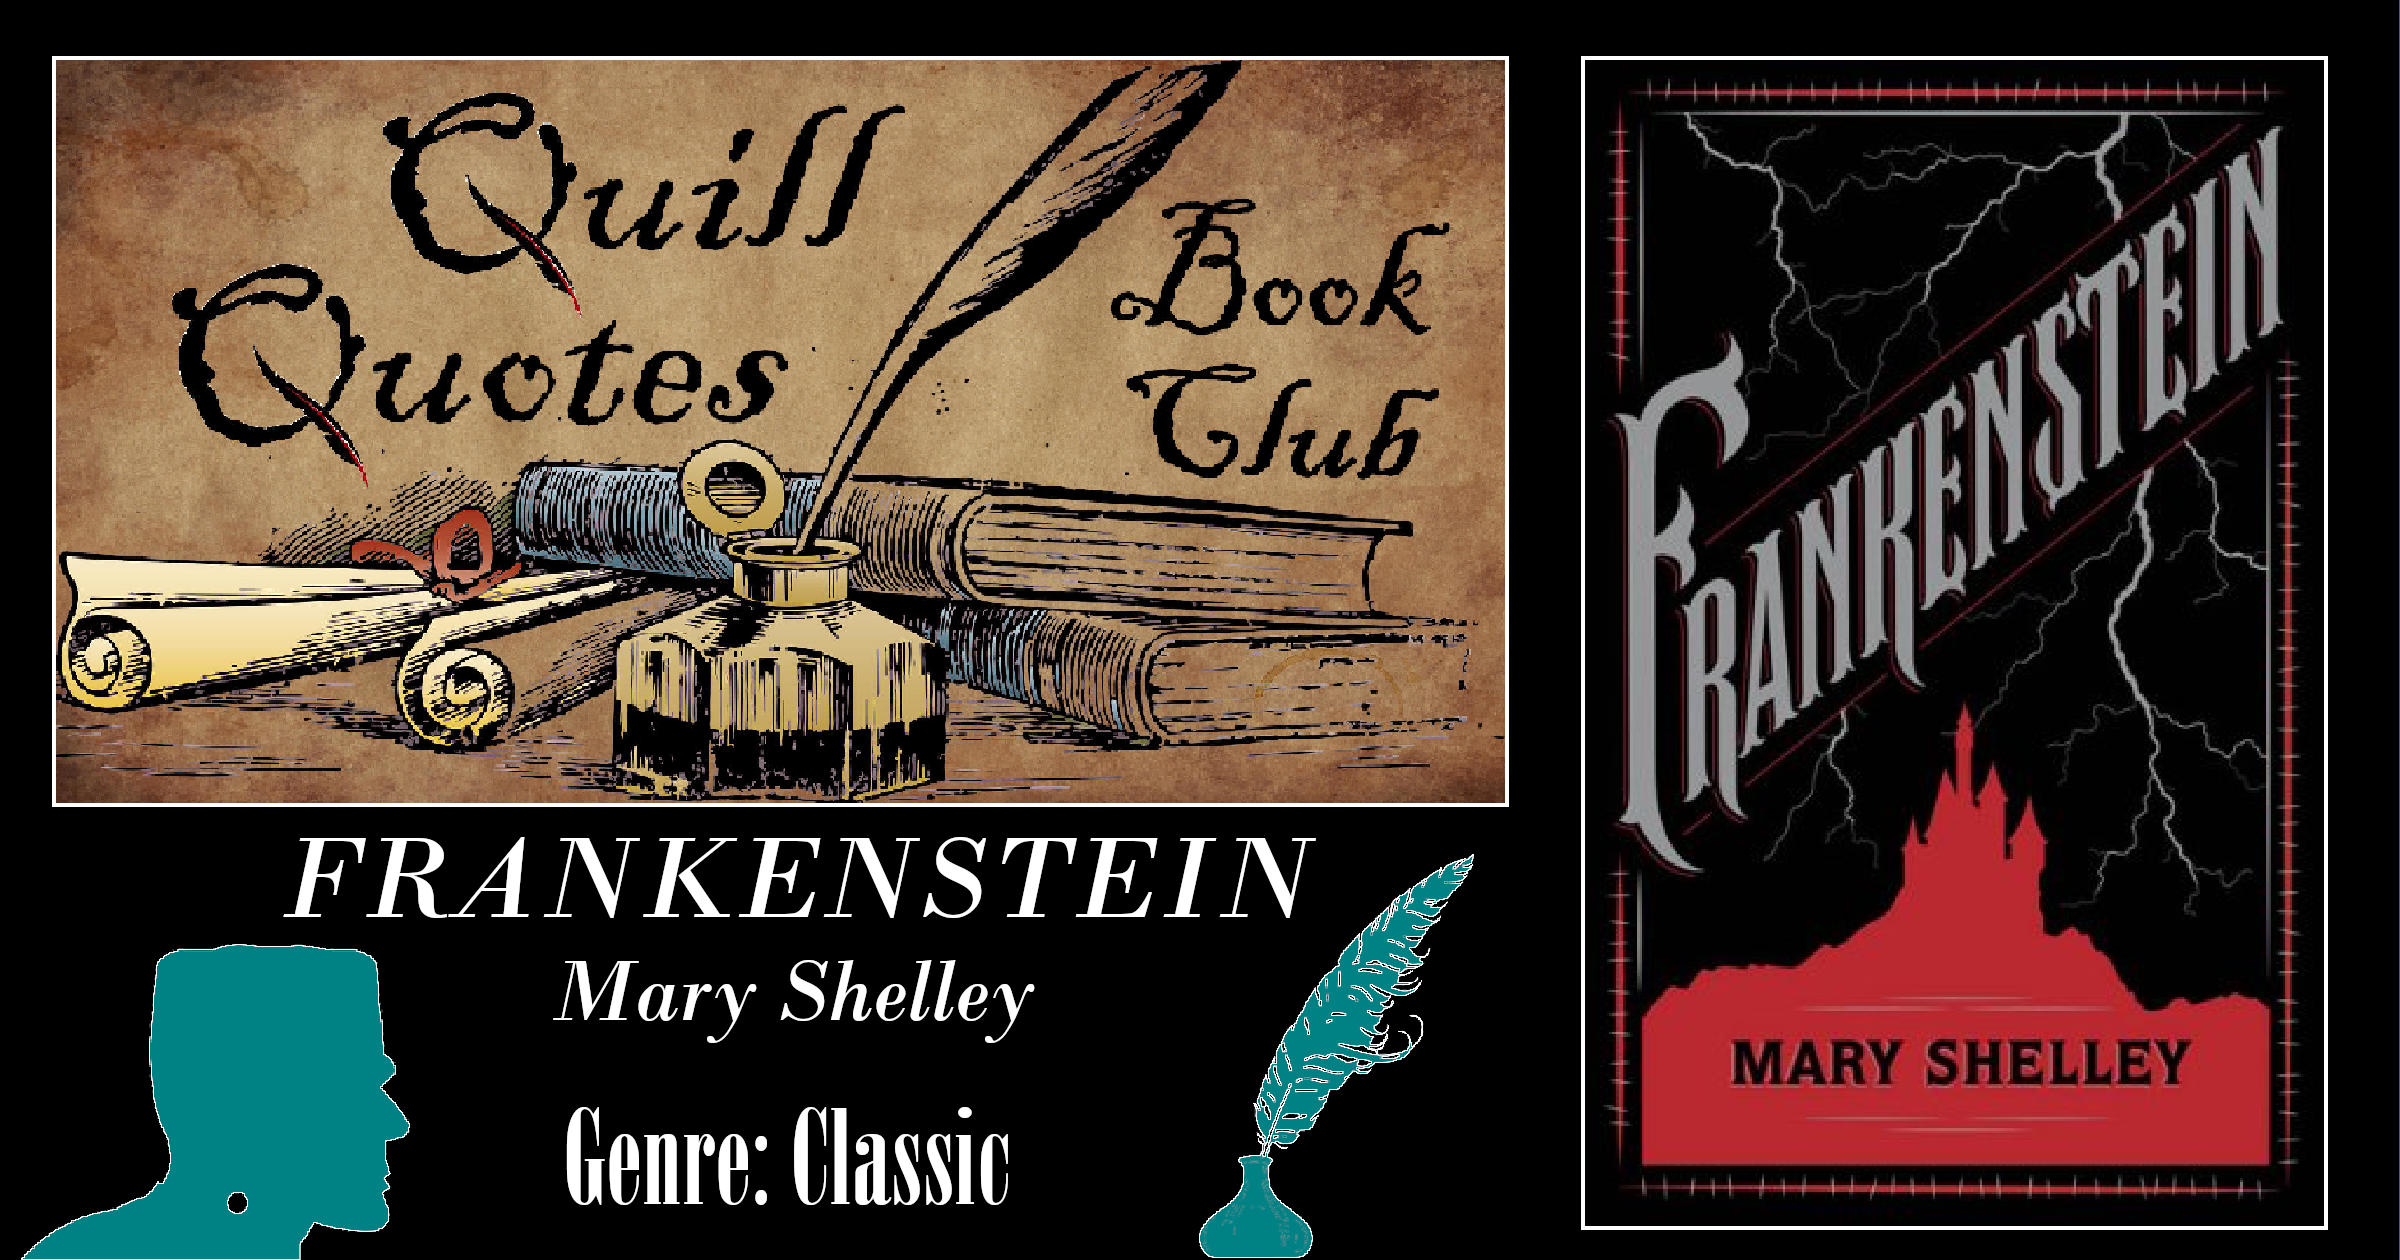 PDF] Bækur The Mary Shelley Club